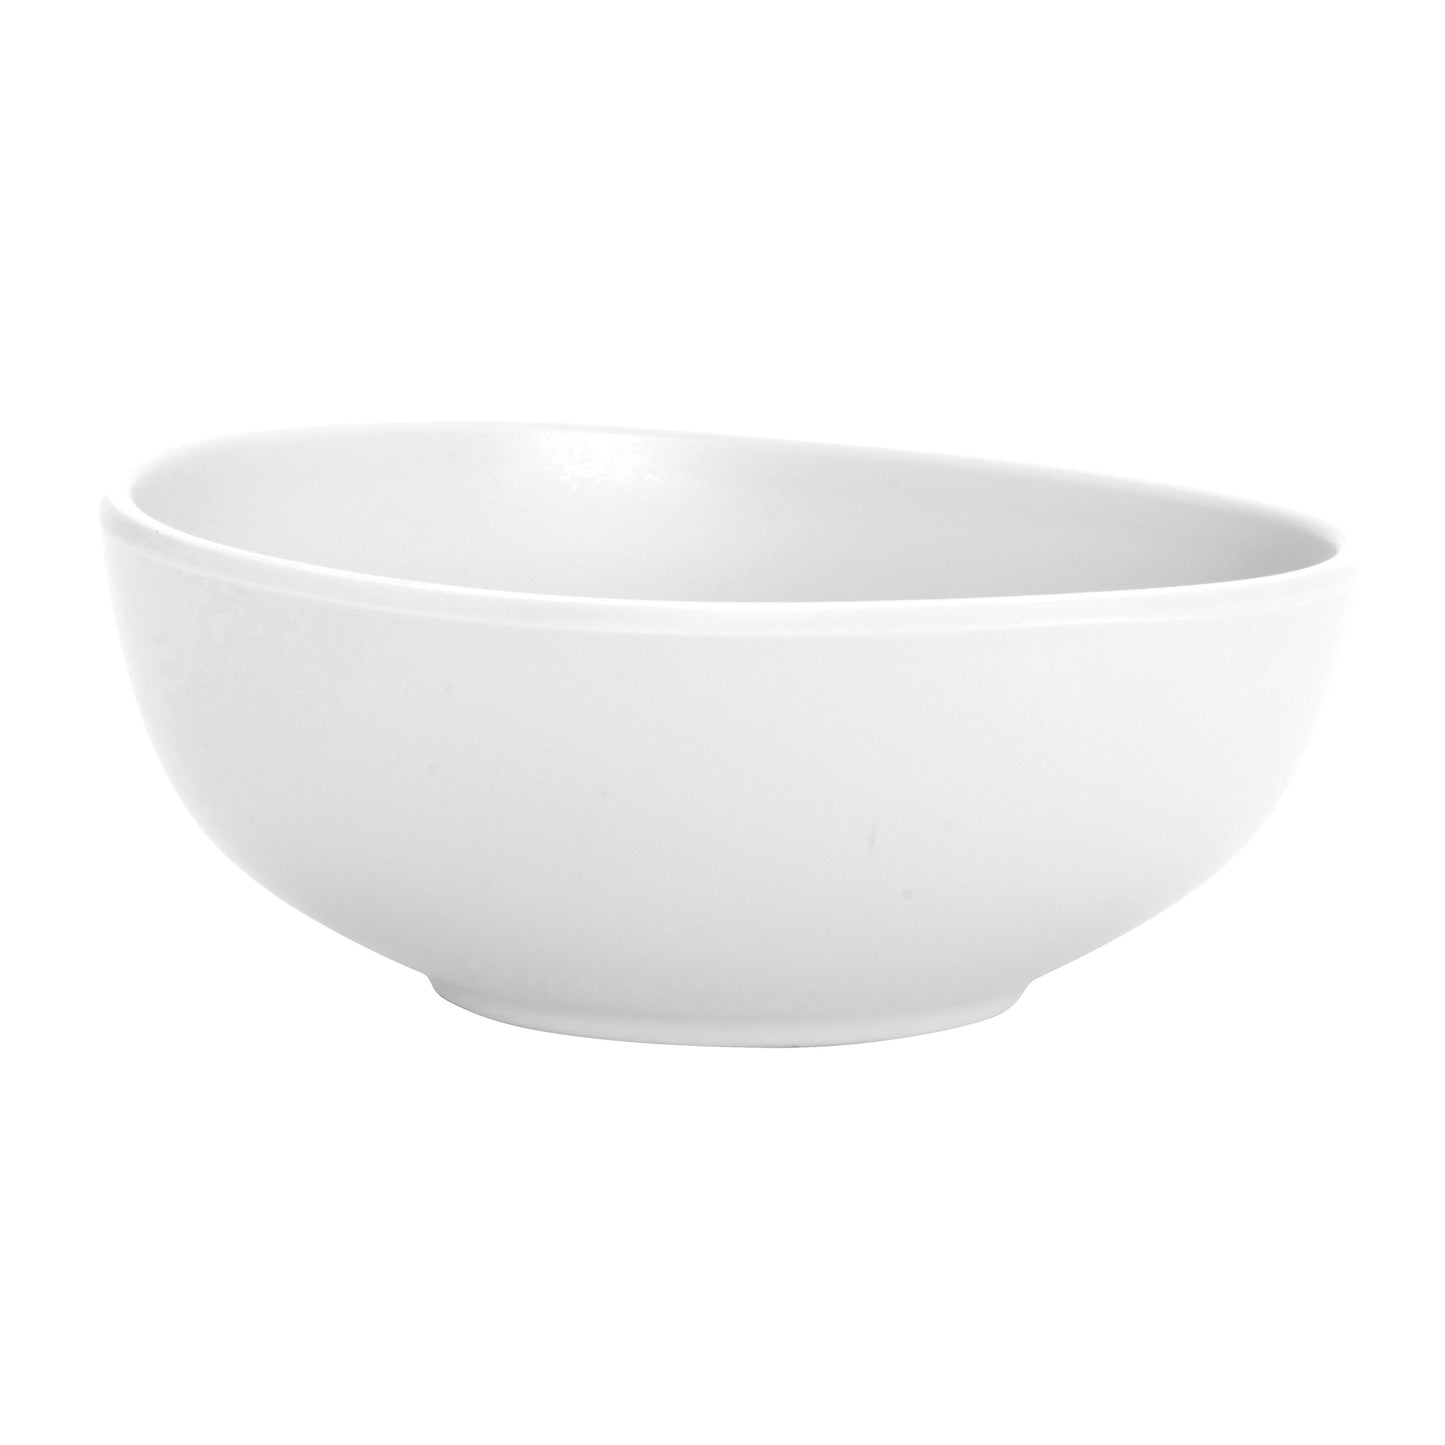 3 oz. White, Melamine, Small Side Dish Bowl, (4.5 oz. rim-full), 1.4" H, (1.6" Max H), 3.9" L x 3.4" W, G.E.T. Riverstone (12 Pack)